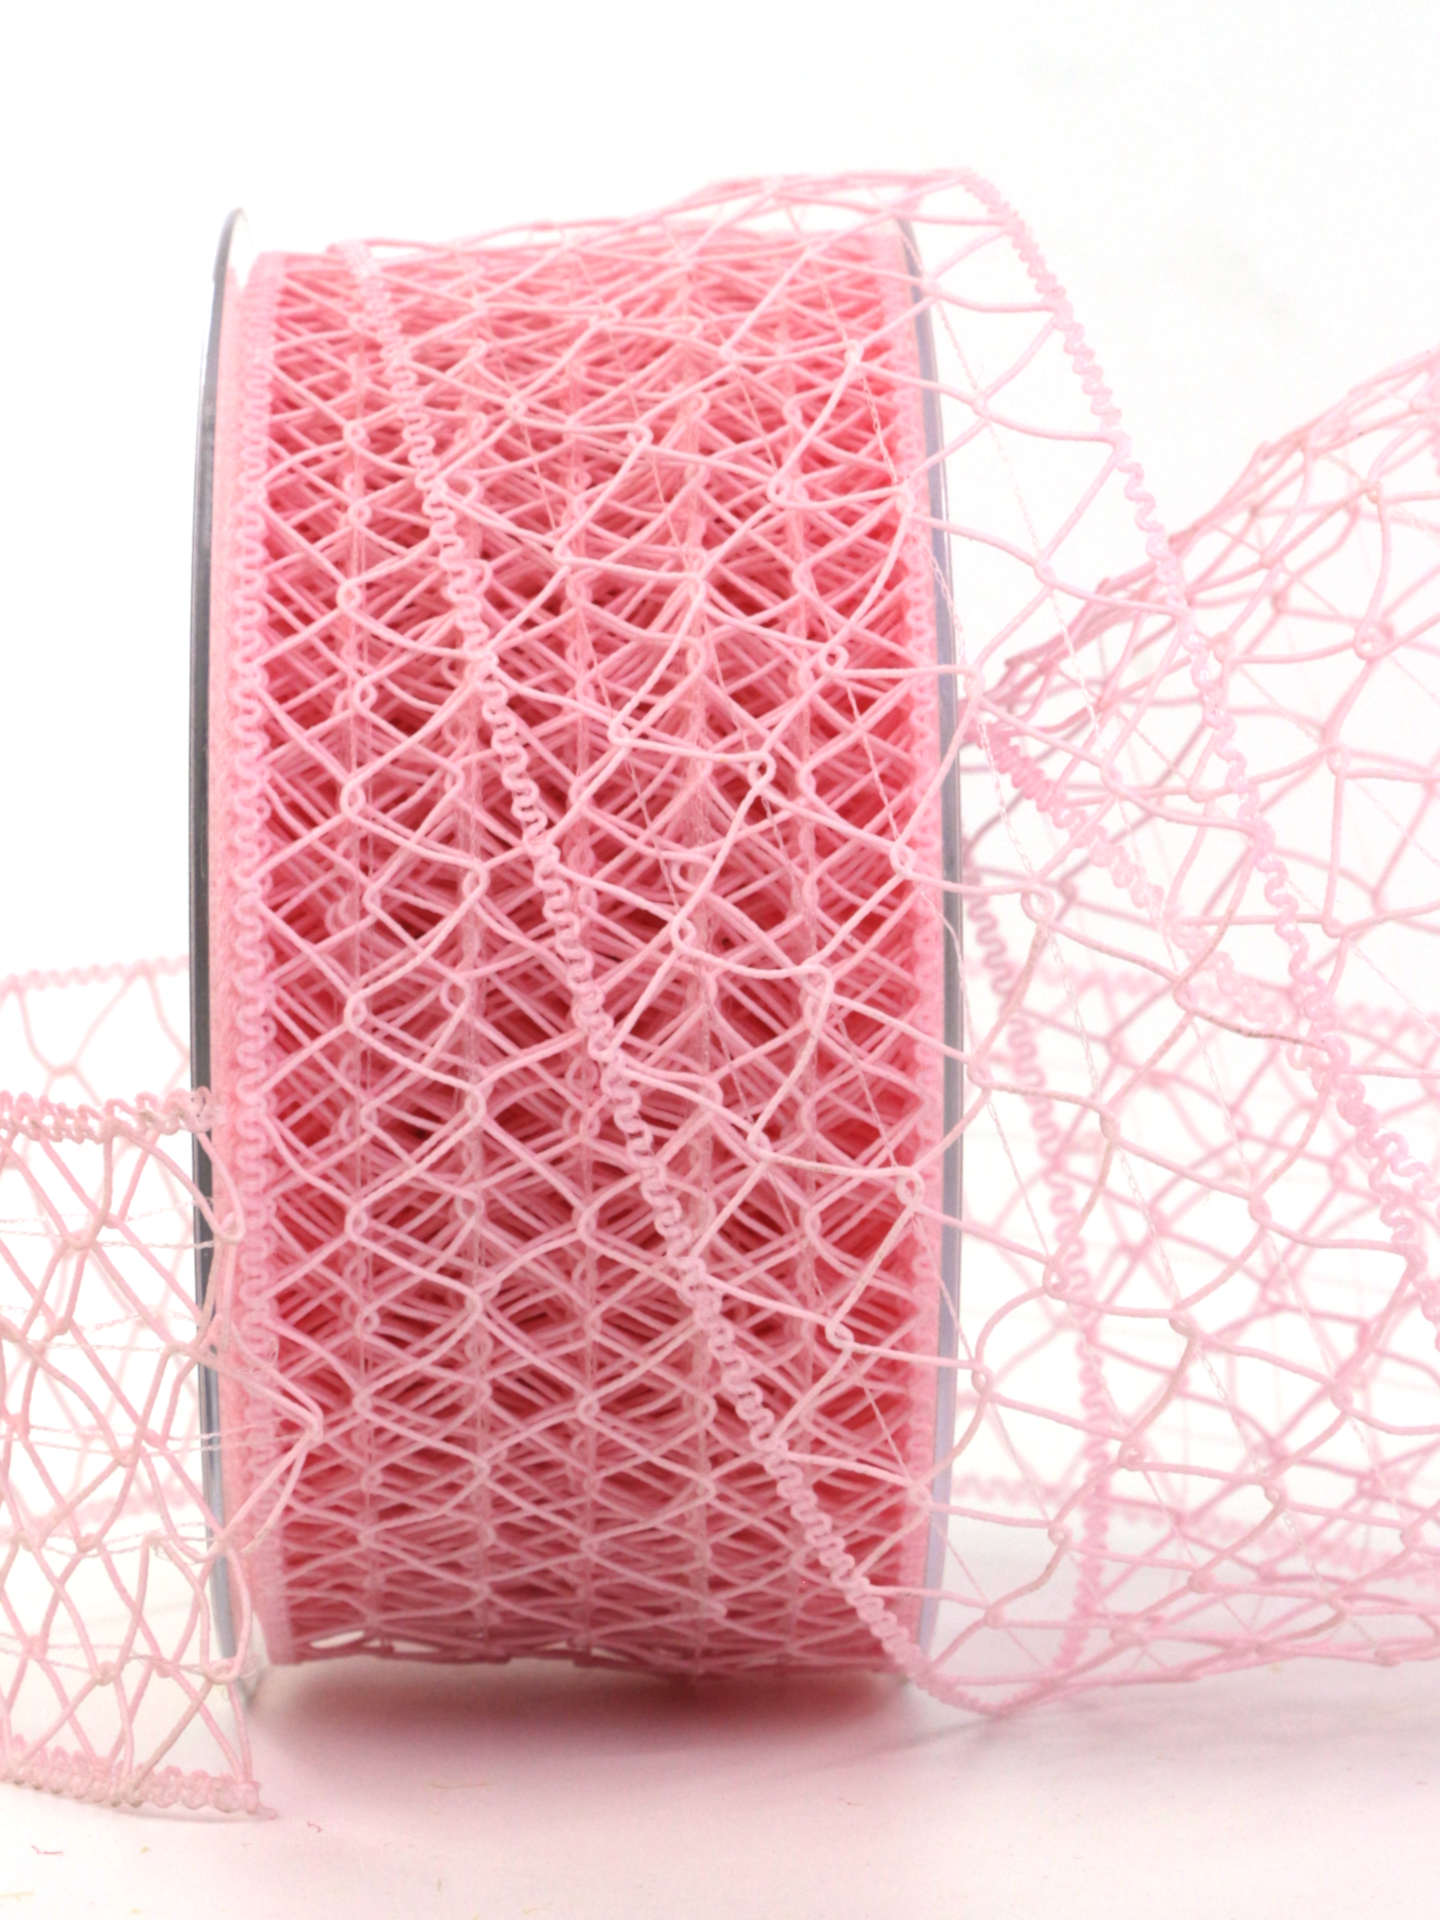 Klassisches Gitterband, outdoor, rosa, 50 mm breit, 20 m Rolle - netzband, geschenkband, dekoband